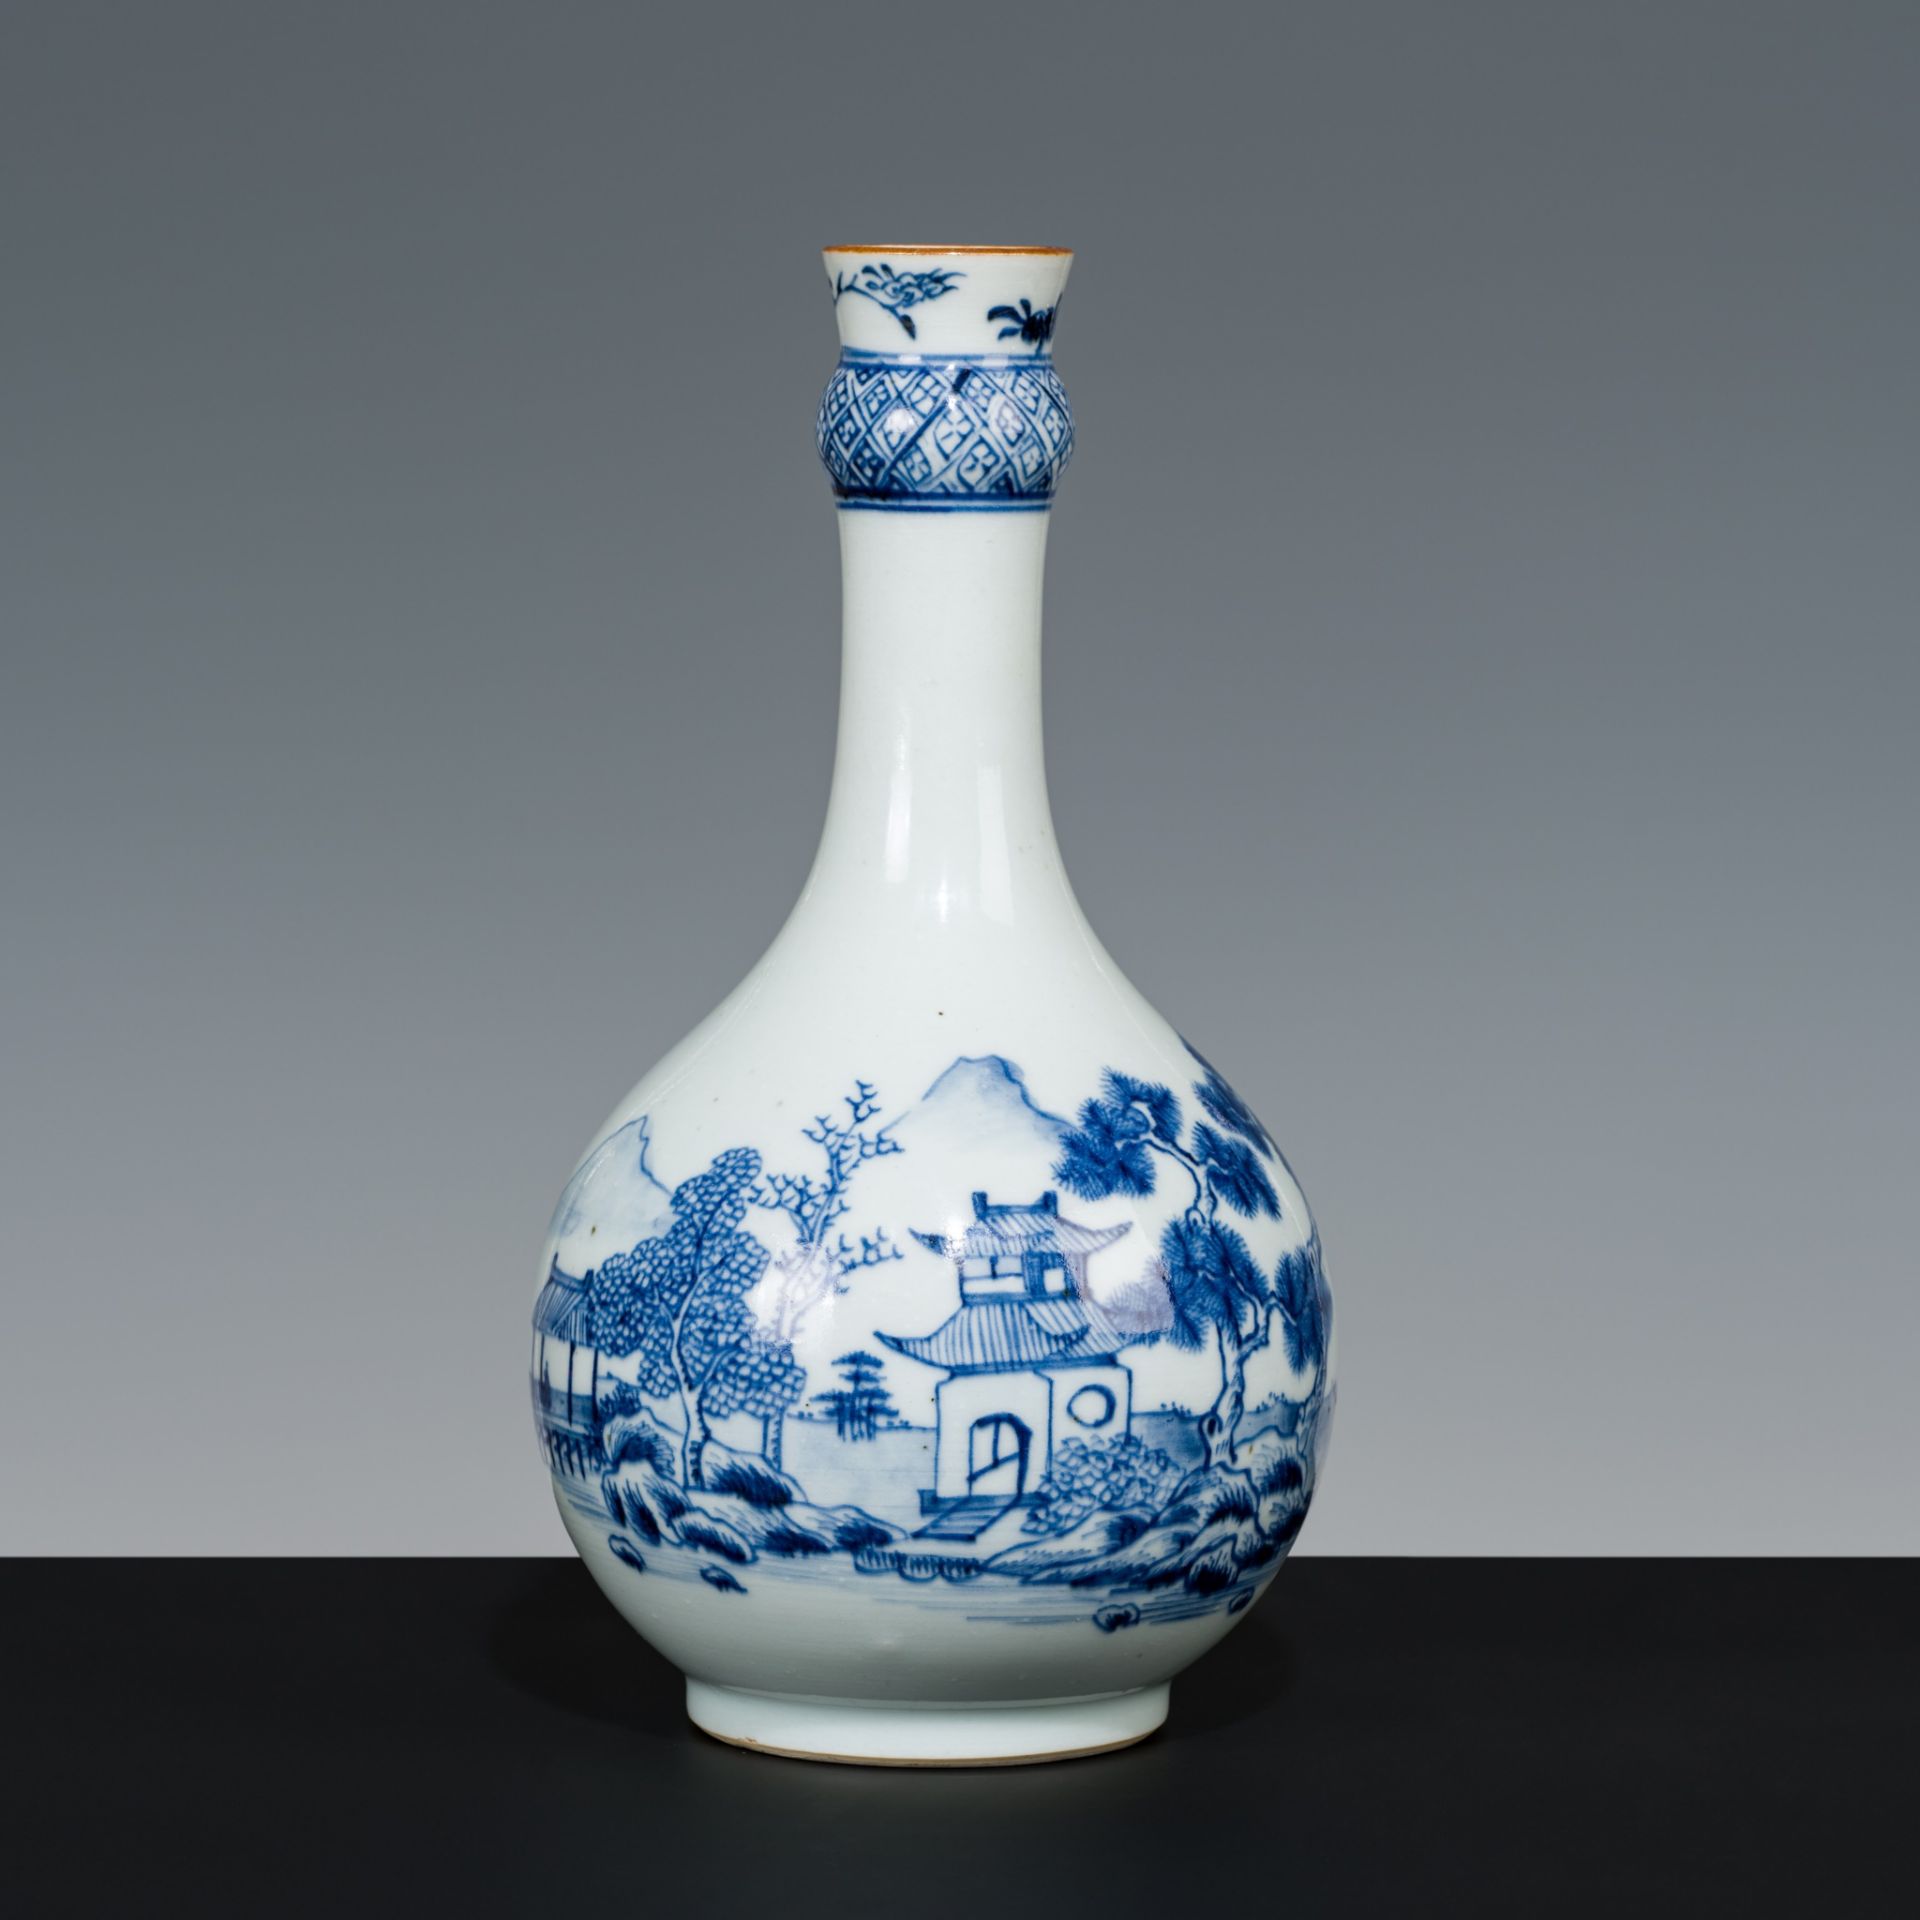 A BLUE AND WHITE PORCELAIN BOTTLE VASE, CHINA, 18TH CENTURY